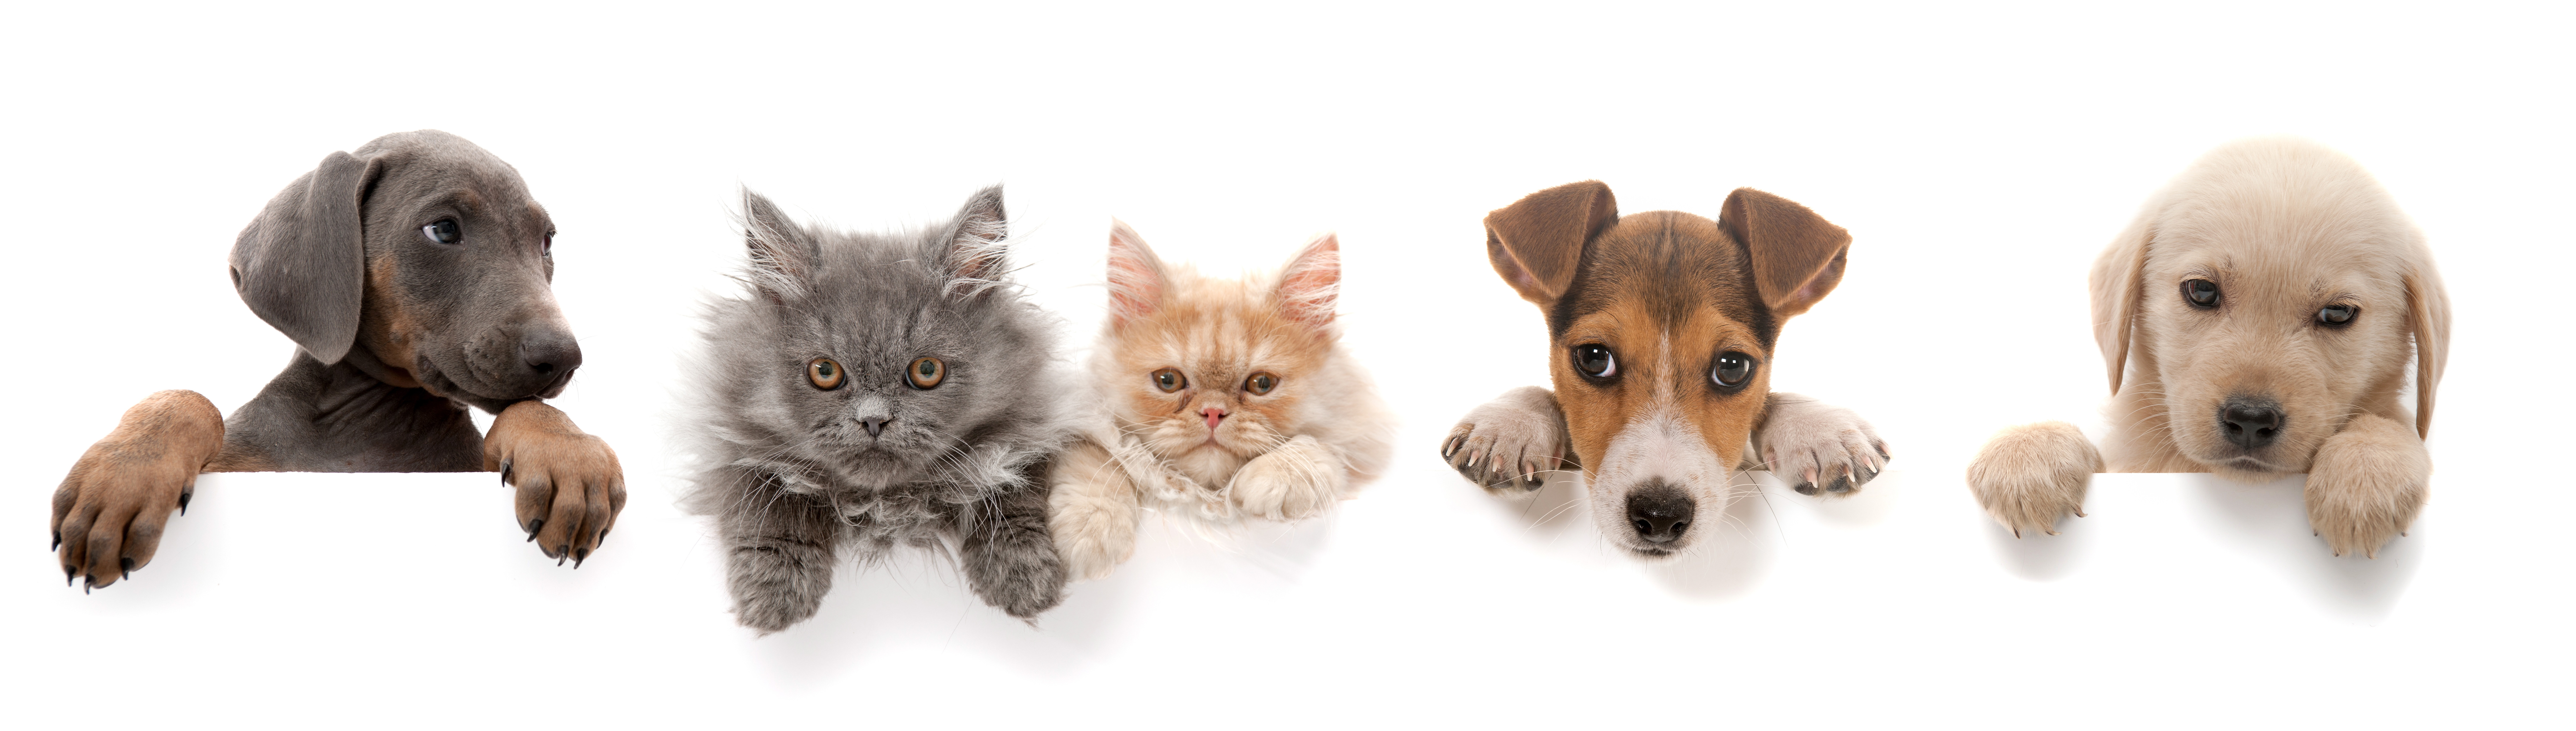 Dog cat rules. Животные. Домашние животные. Баннер животные. Кошка и собака на белом фоне.